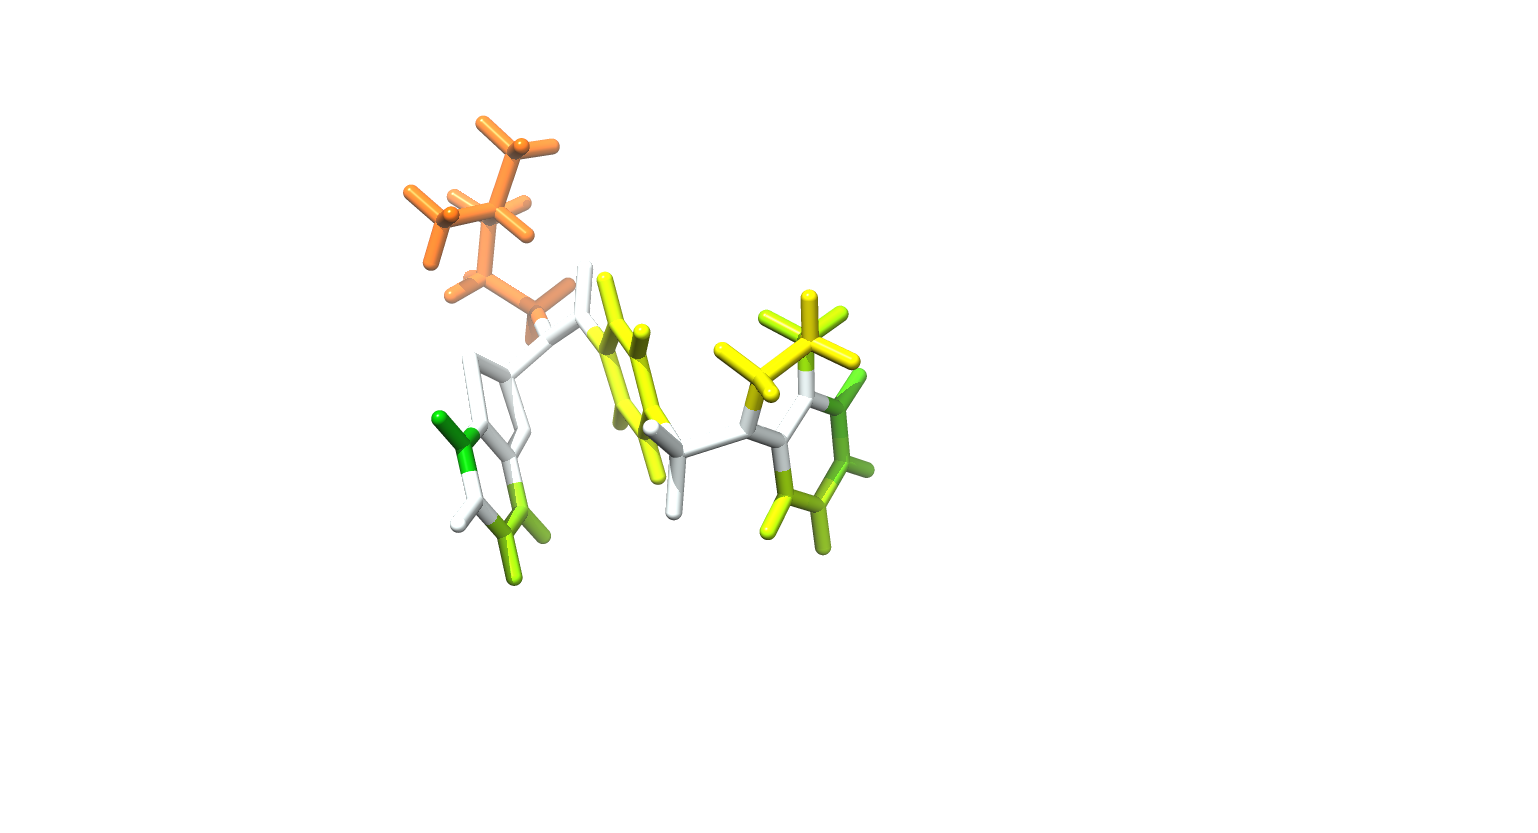 J Pept Sci. 2014: “Small-molecule inhibitors of JC polyomavirus infection.”